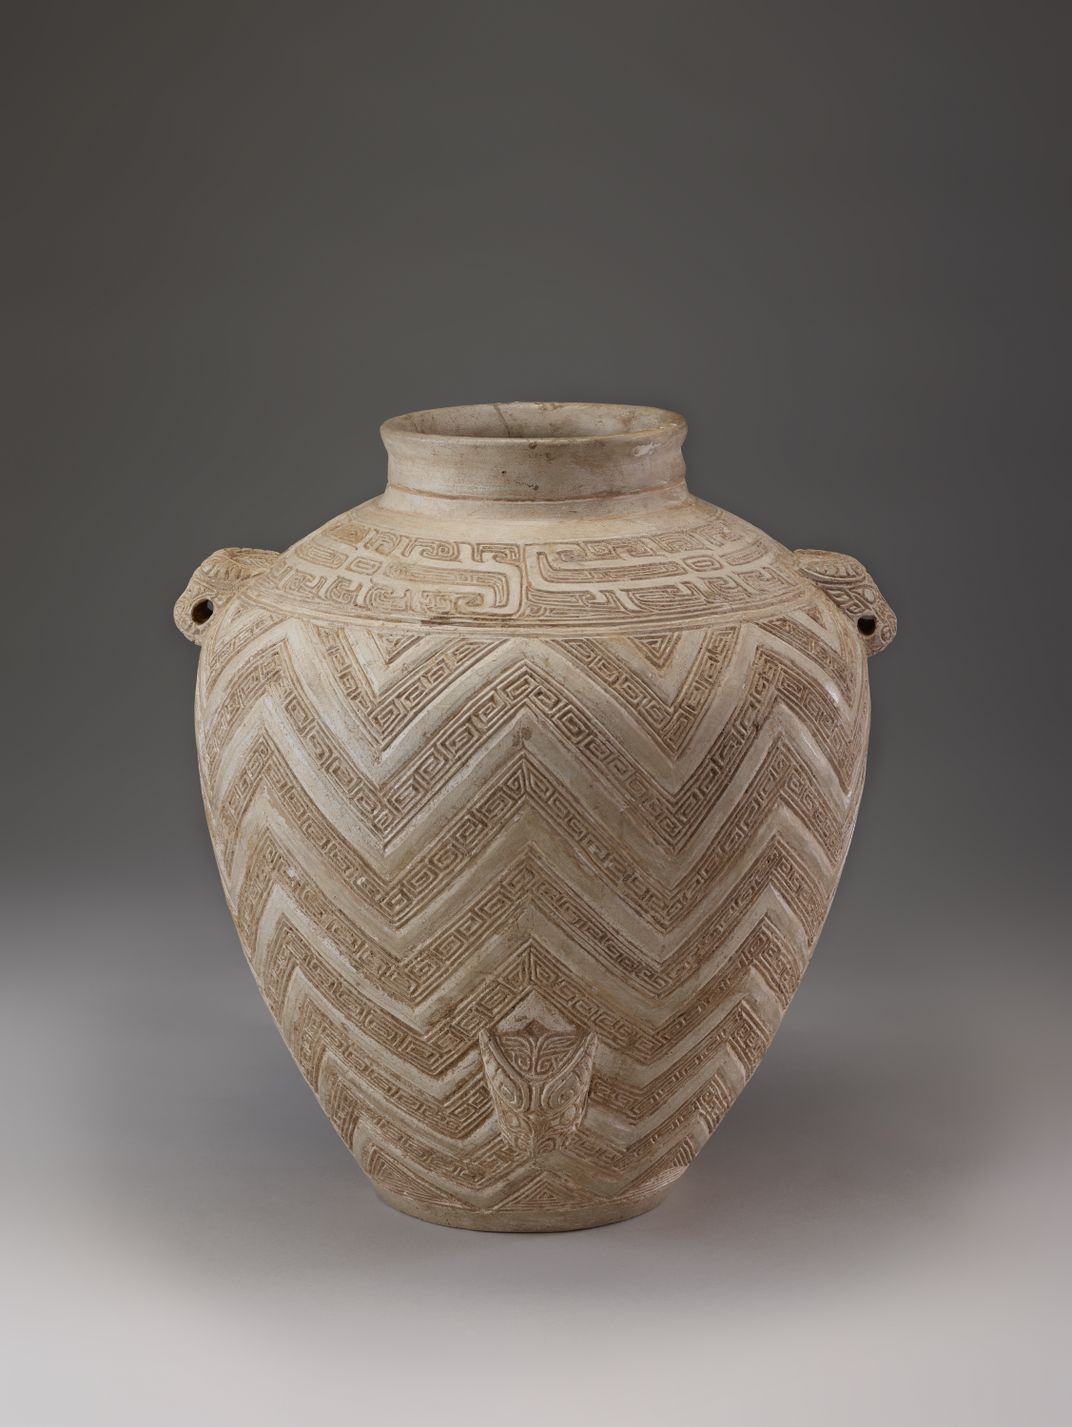 Storage jar unglazed white pottery, early Anyang period, c. 1200 B.C.E.